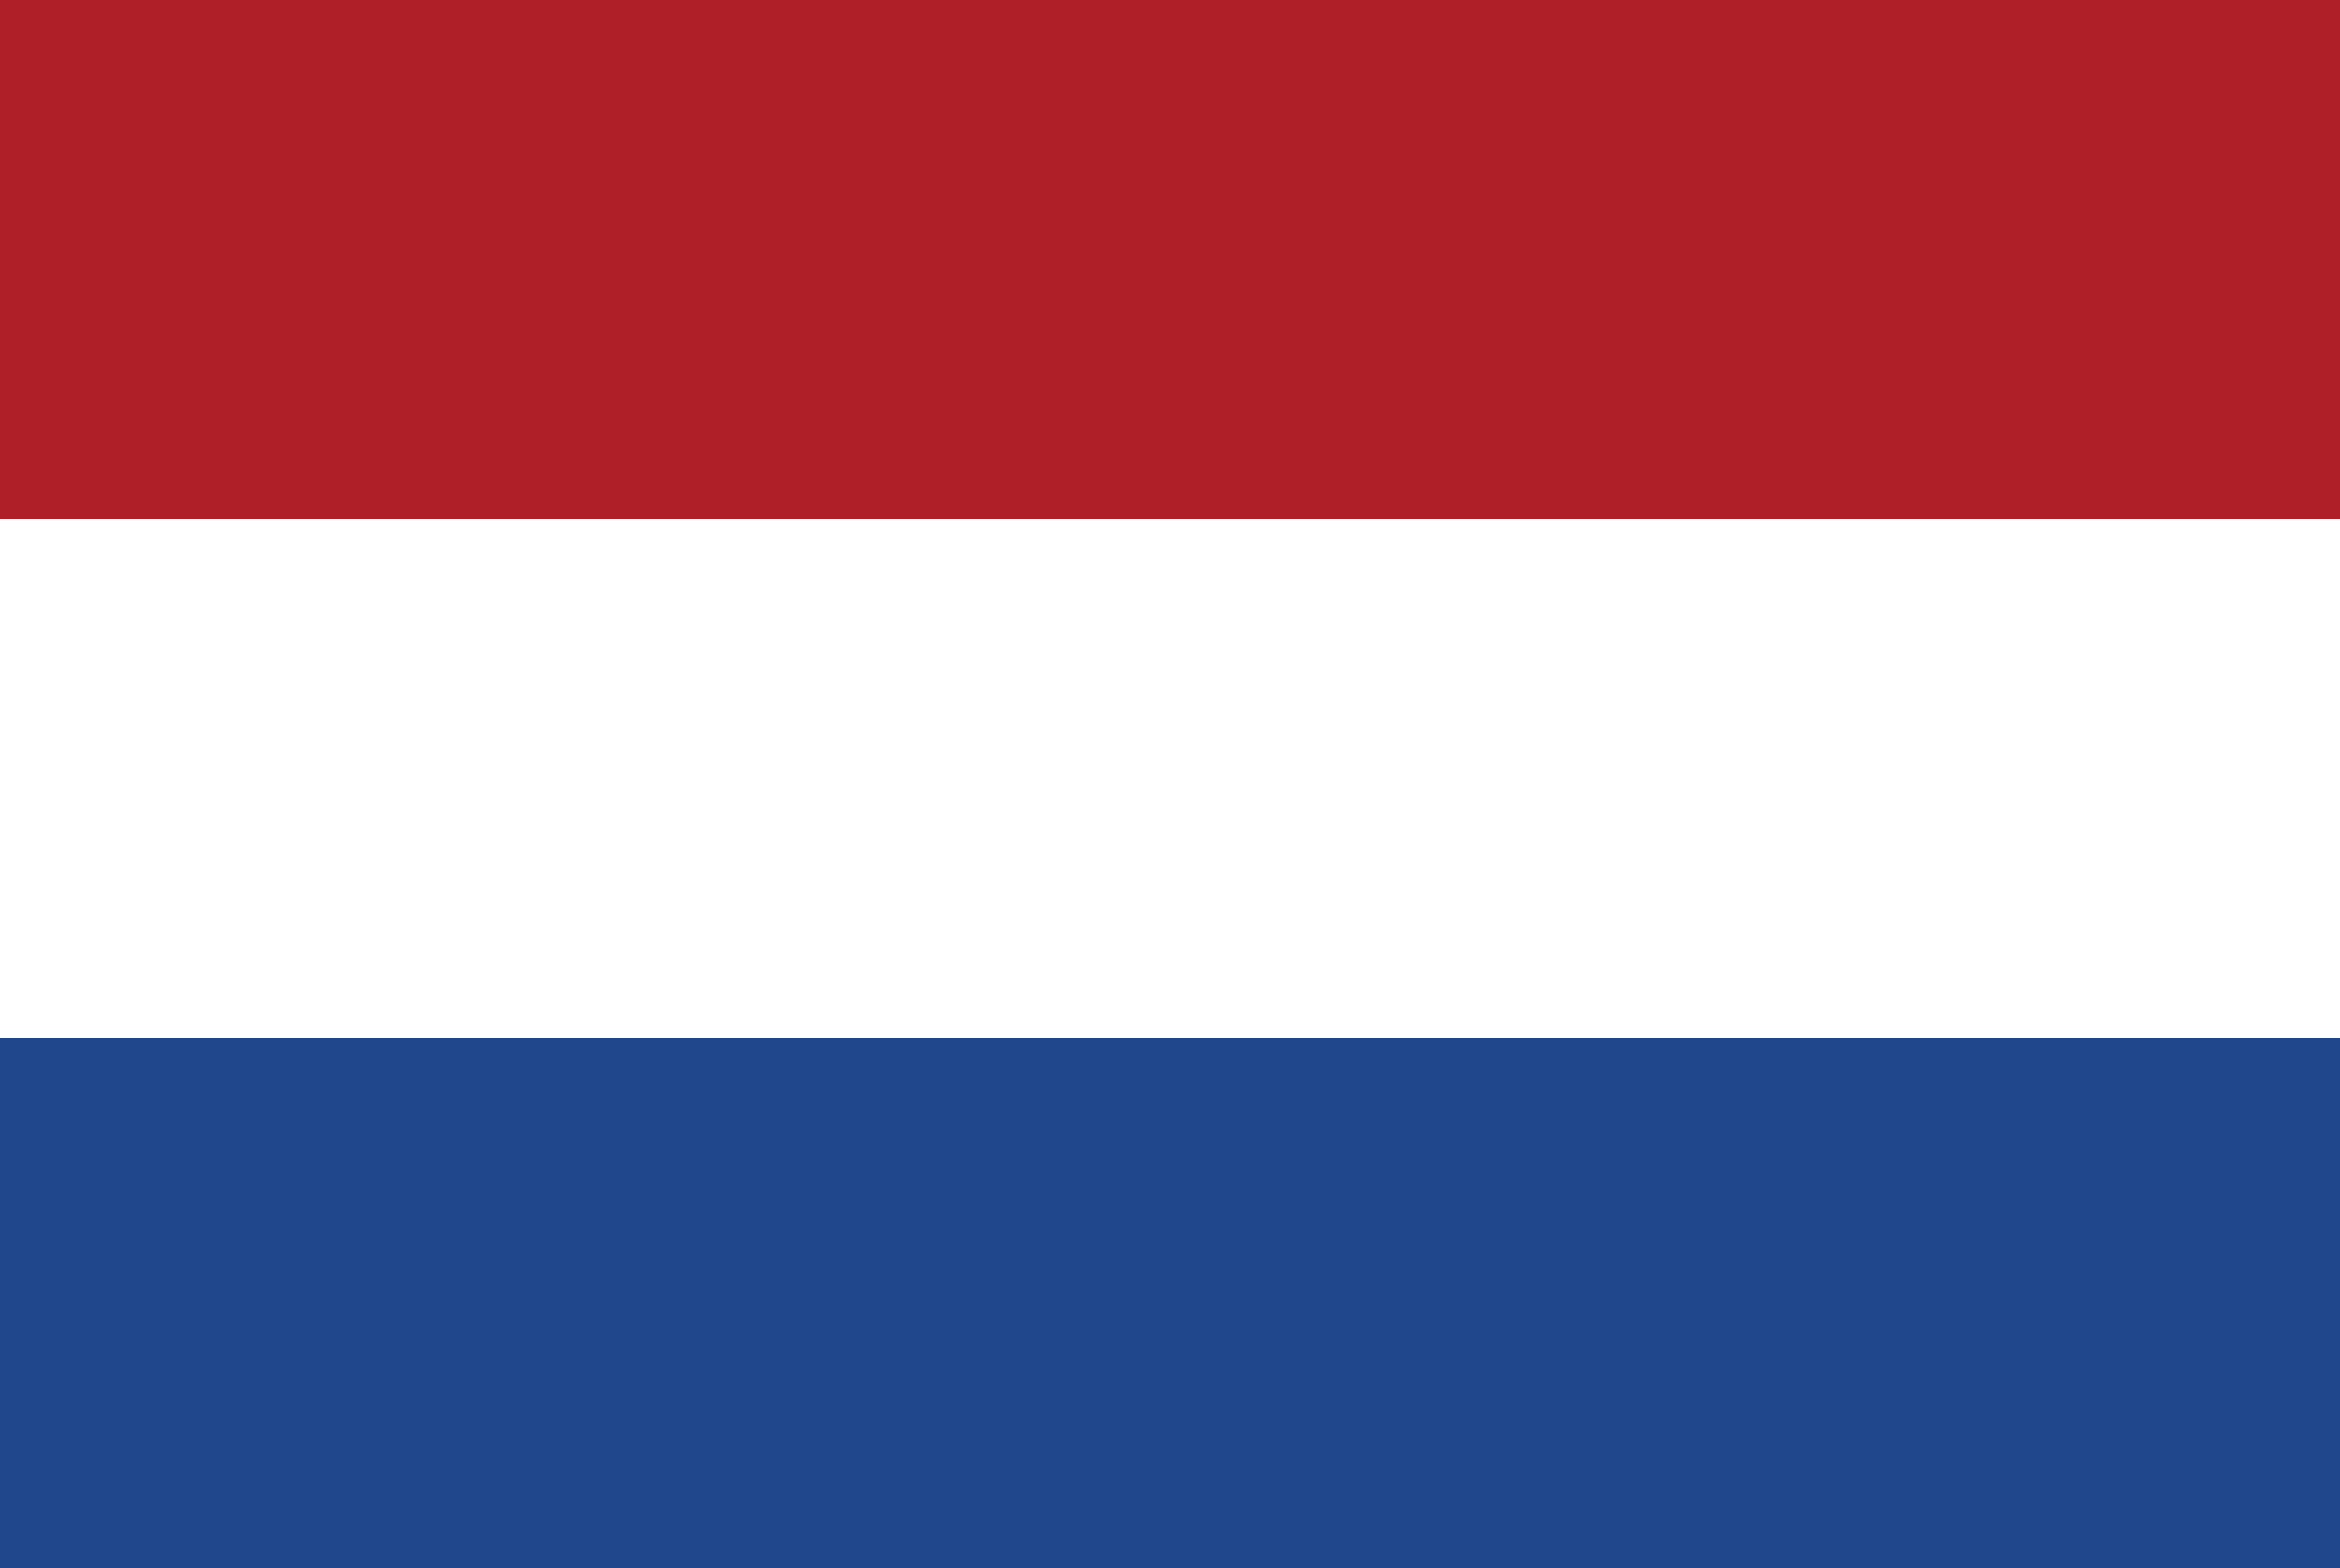 Euro 2020 Netherlands